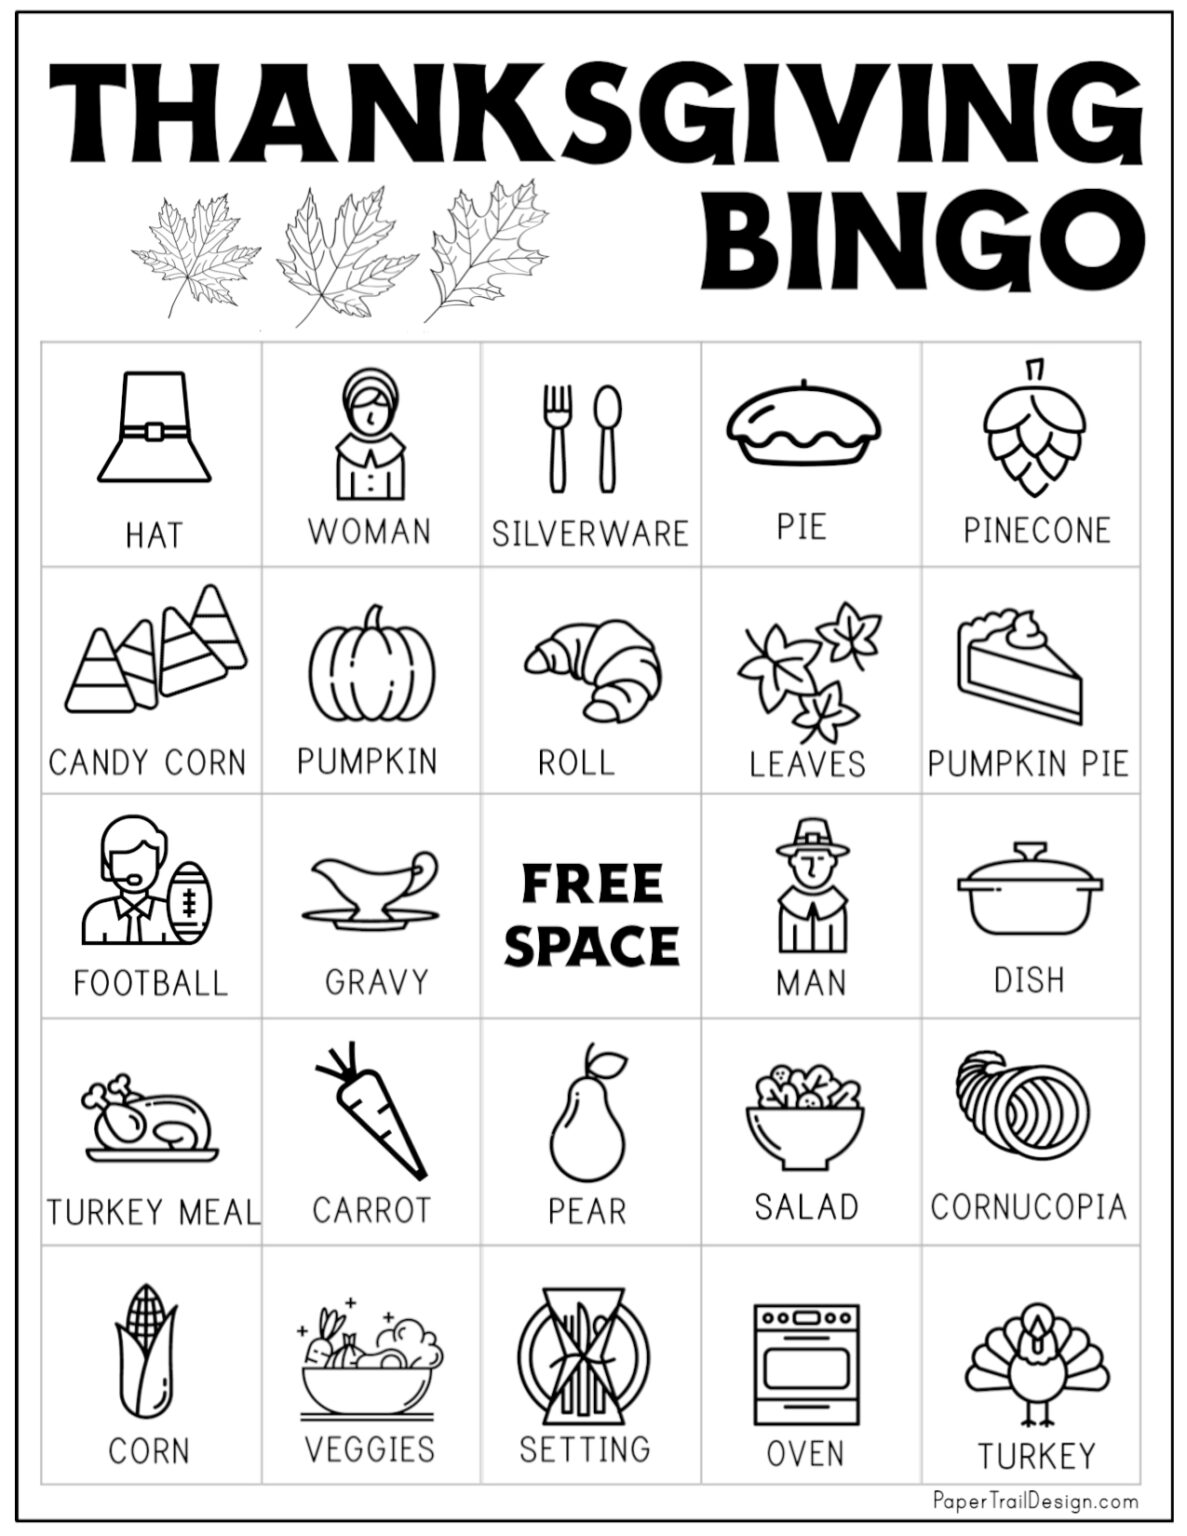 Free Printable Thanksgiving Bingo Cards - Paper Trail Design